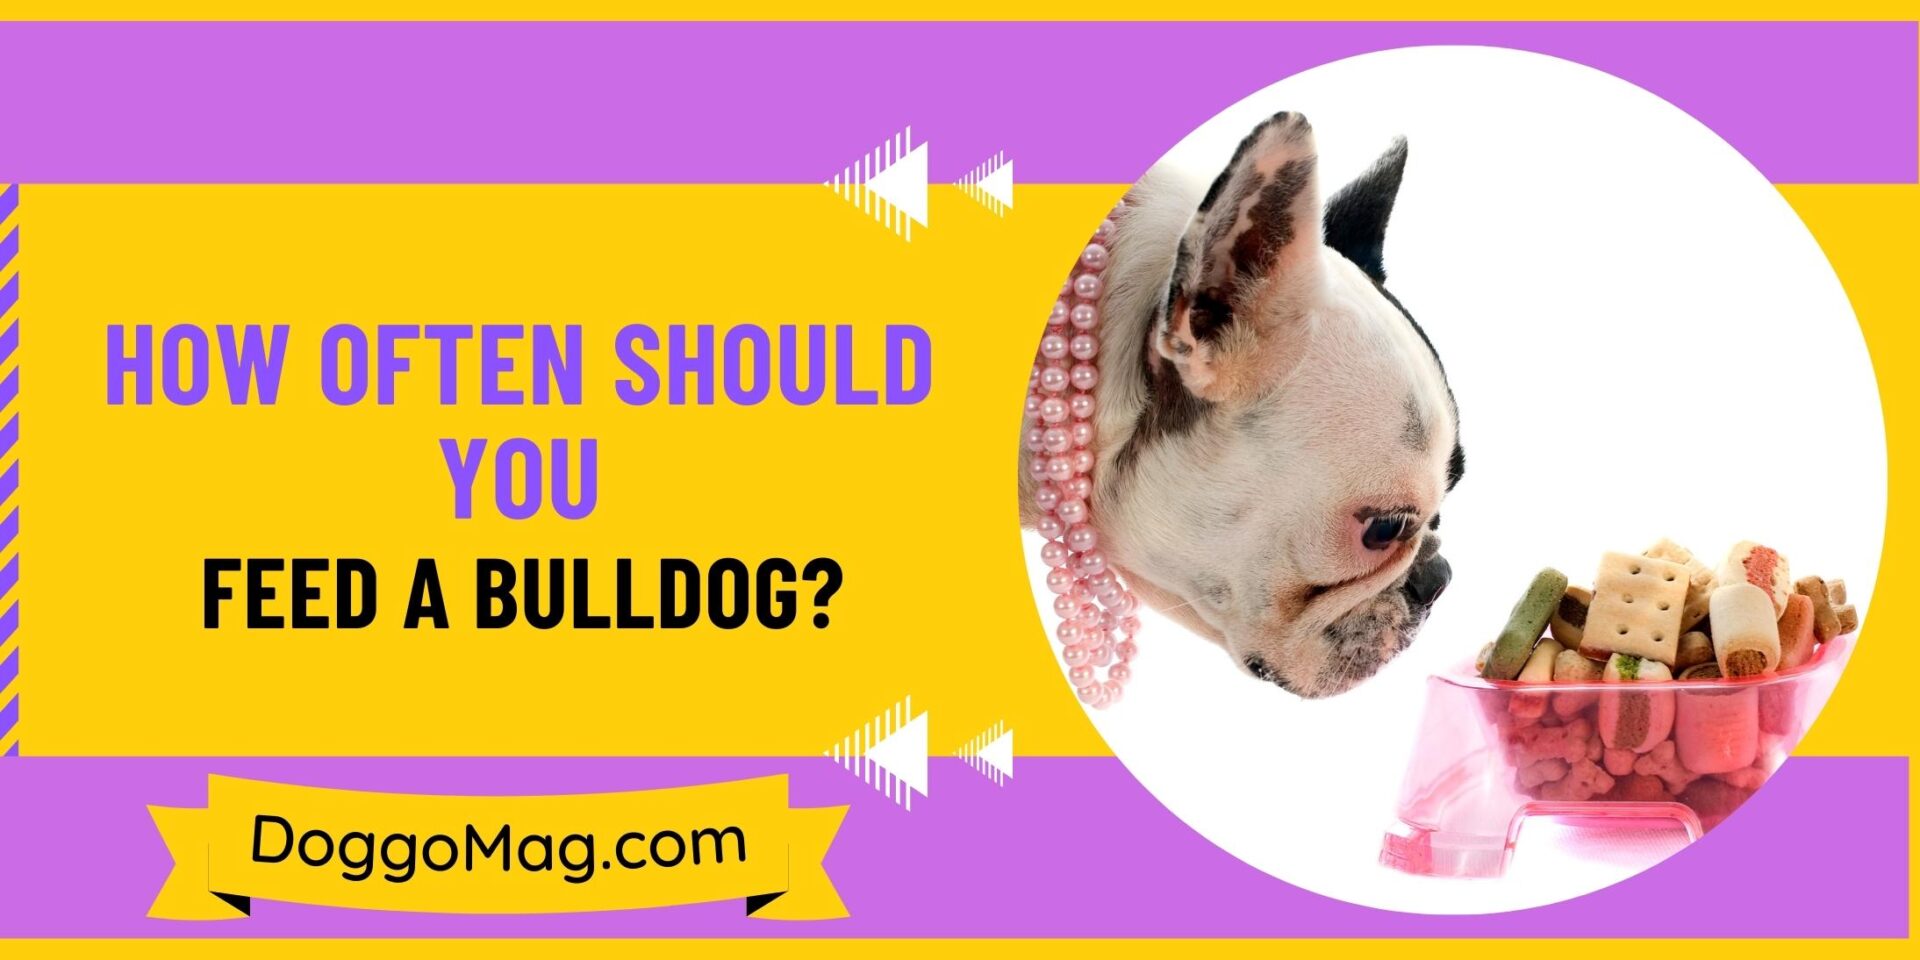 How Often Should You Feed a Bulldog